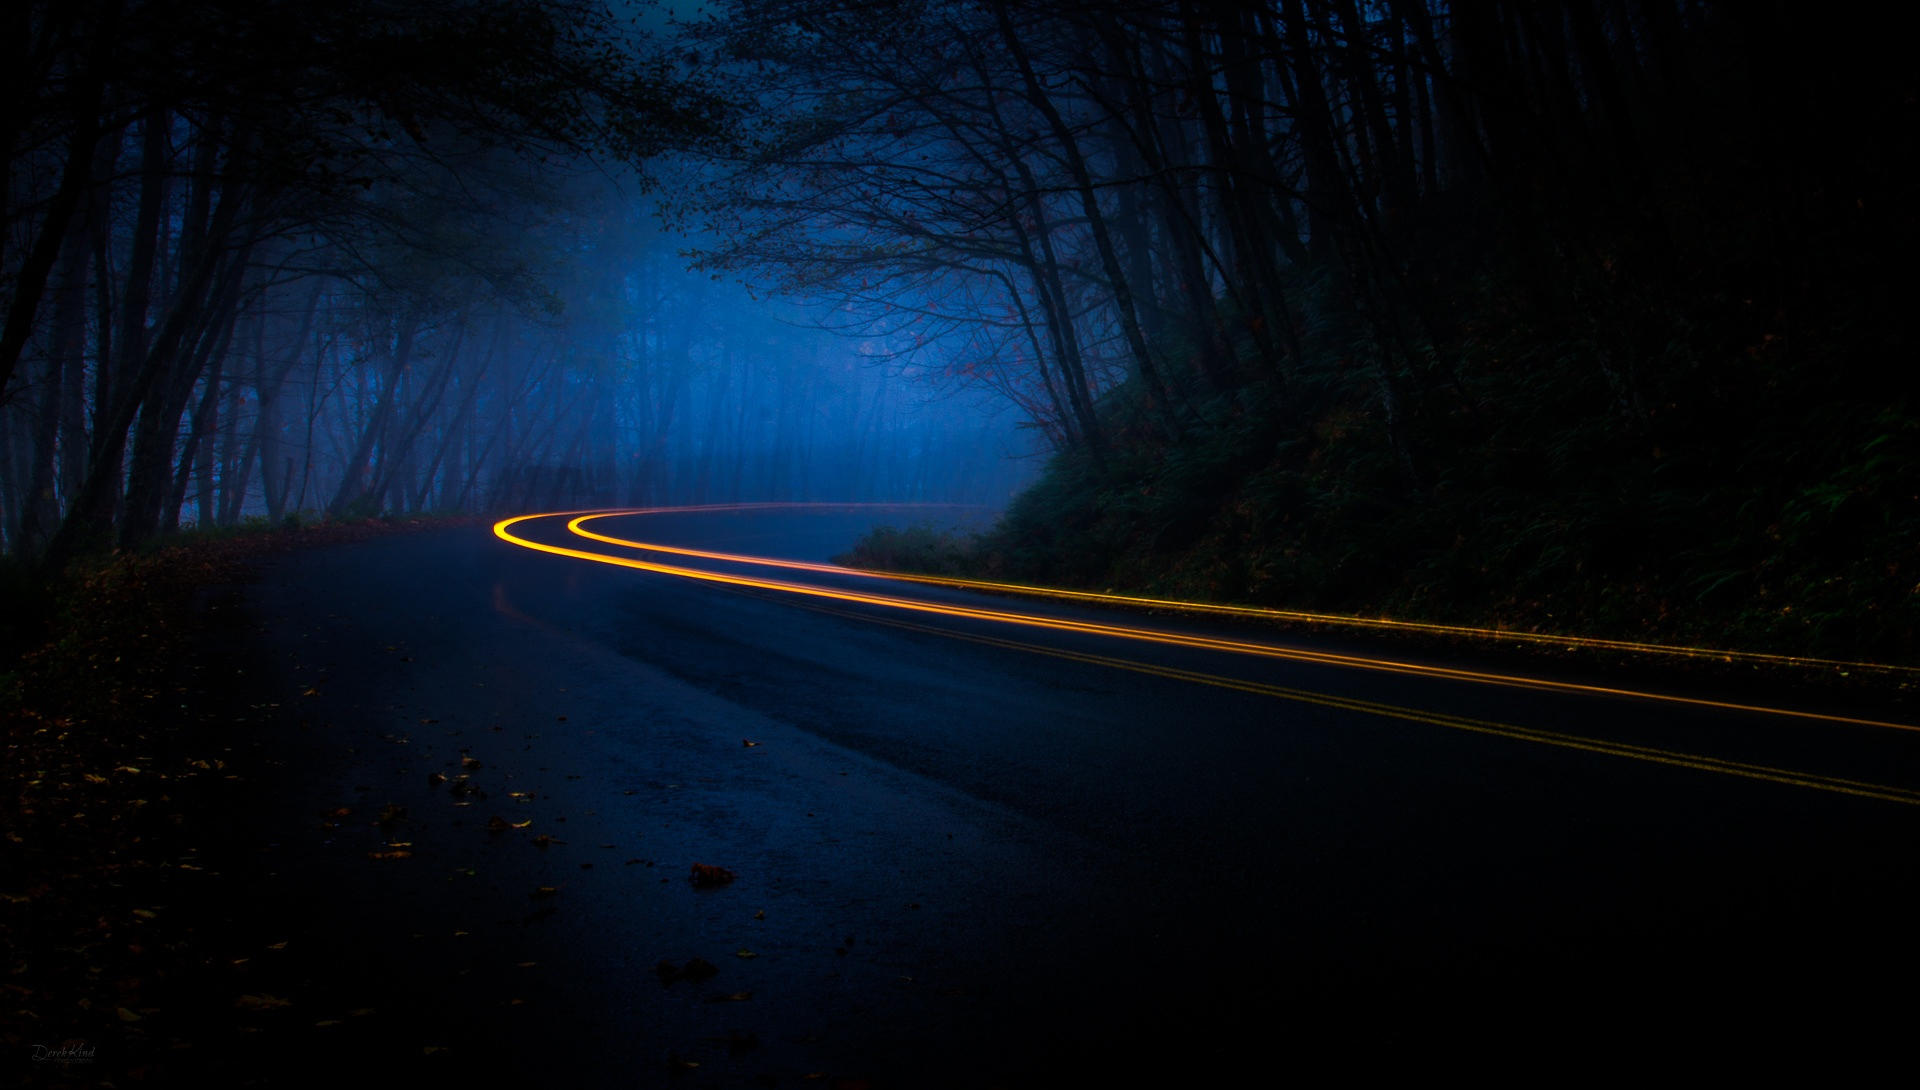 The Eerie Road